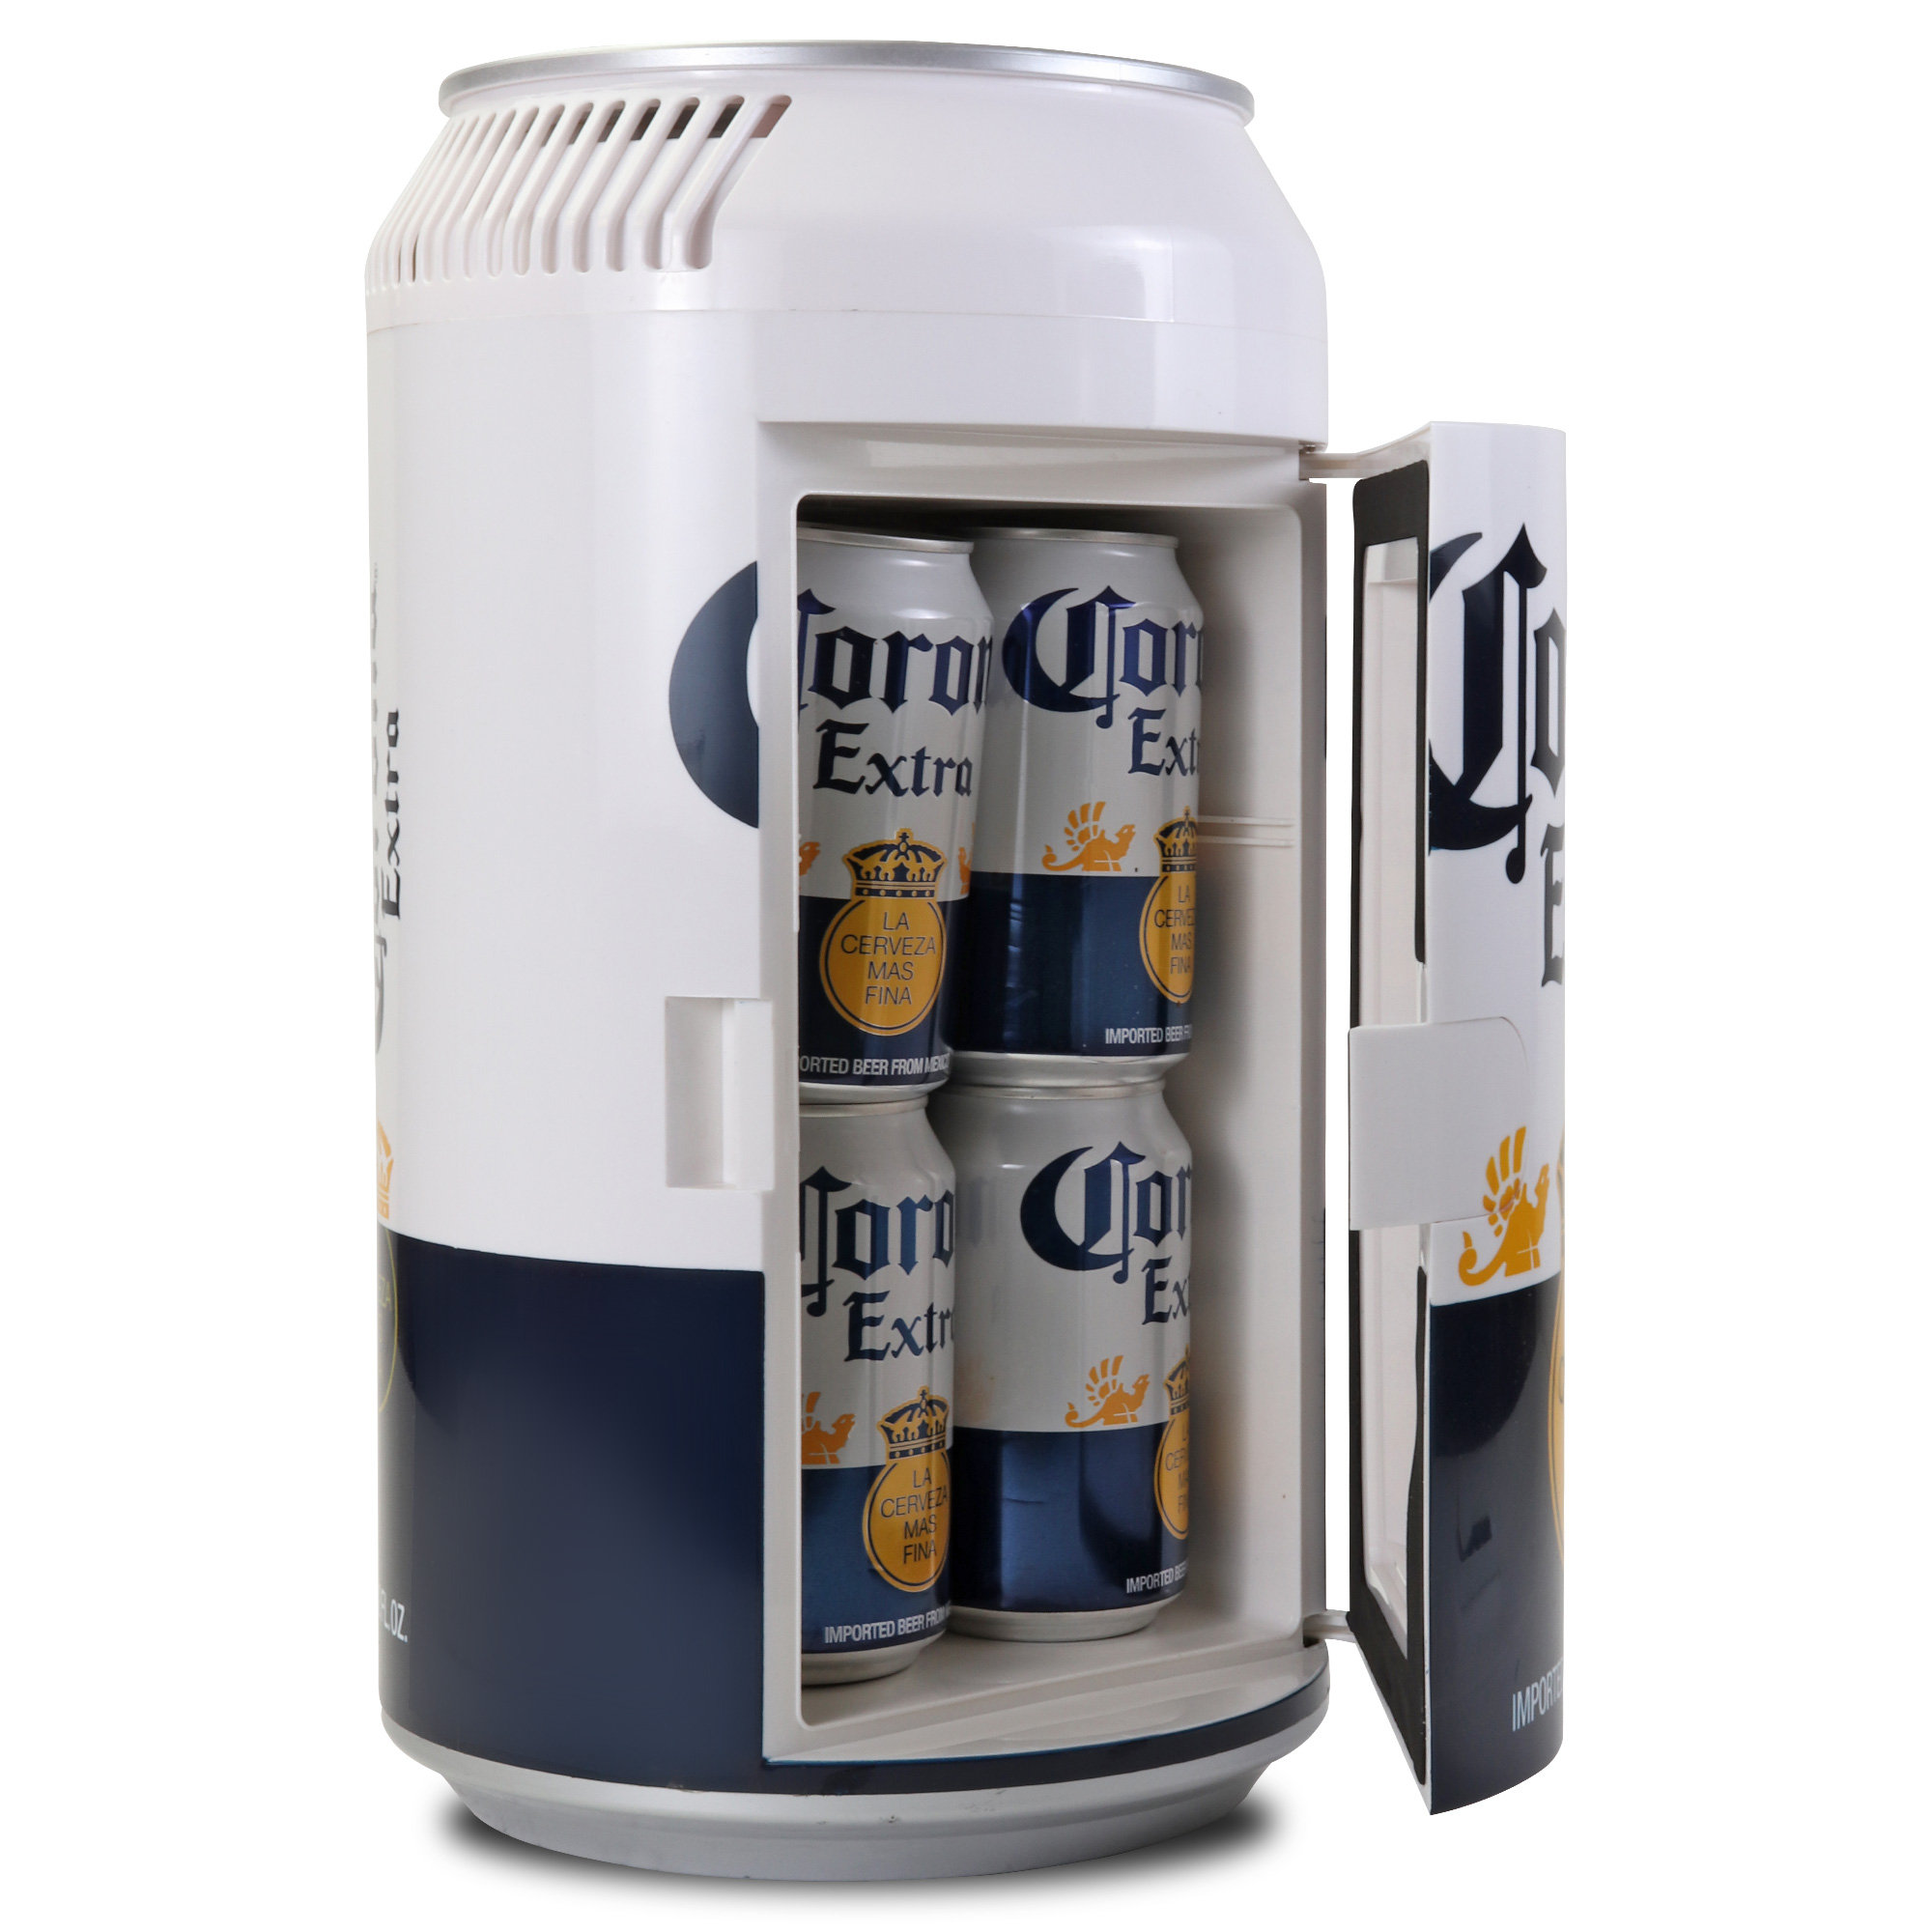 Crownful 4L mini fridge holds 6 cans, keeps them nice and cold! #mini, Mini  Fridge